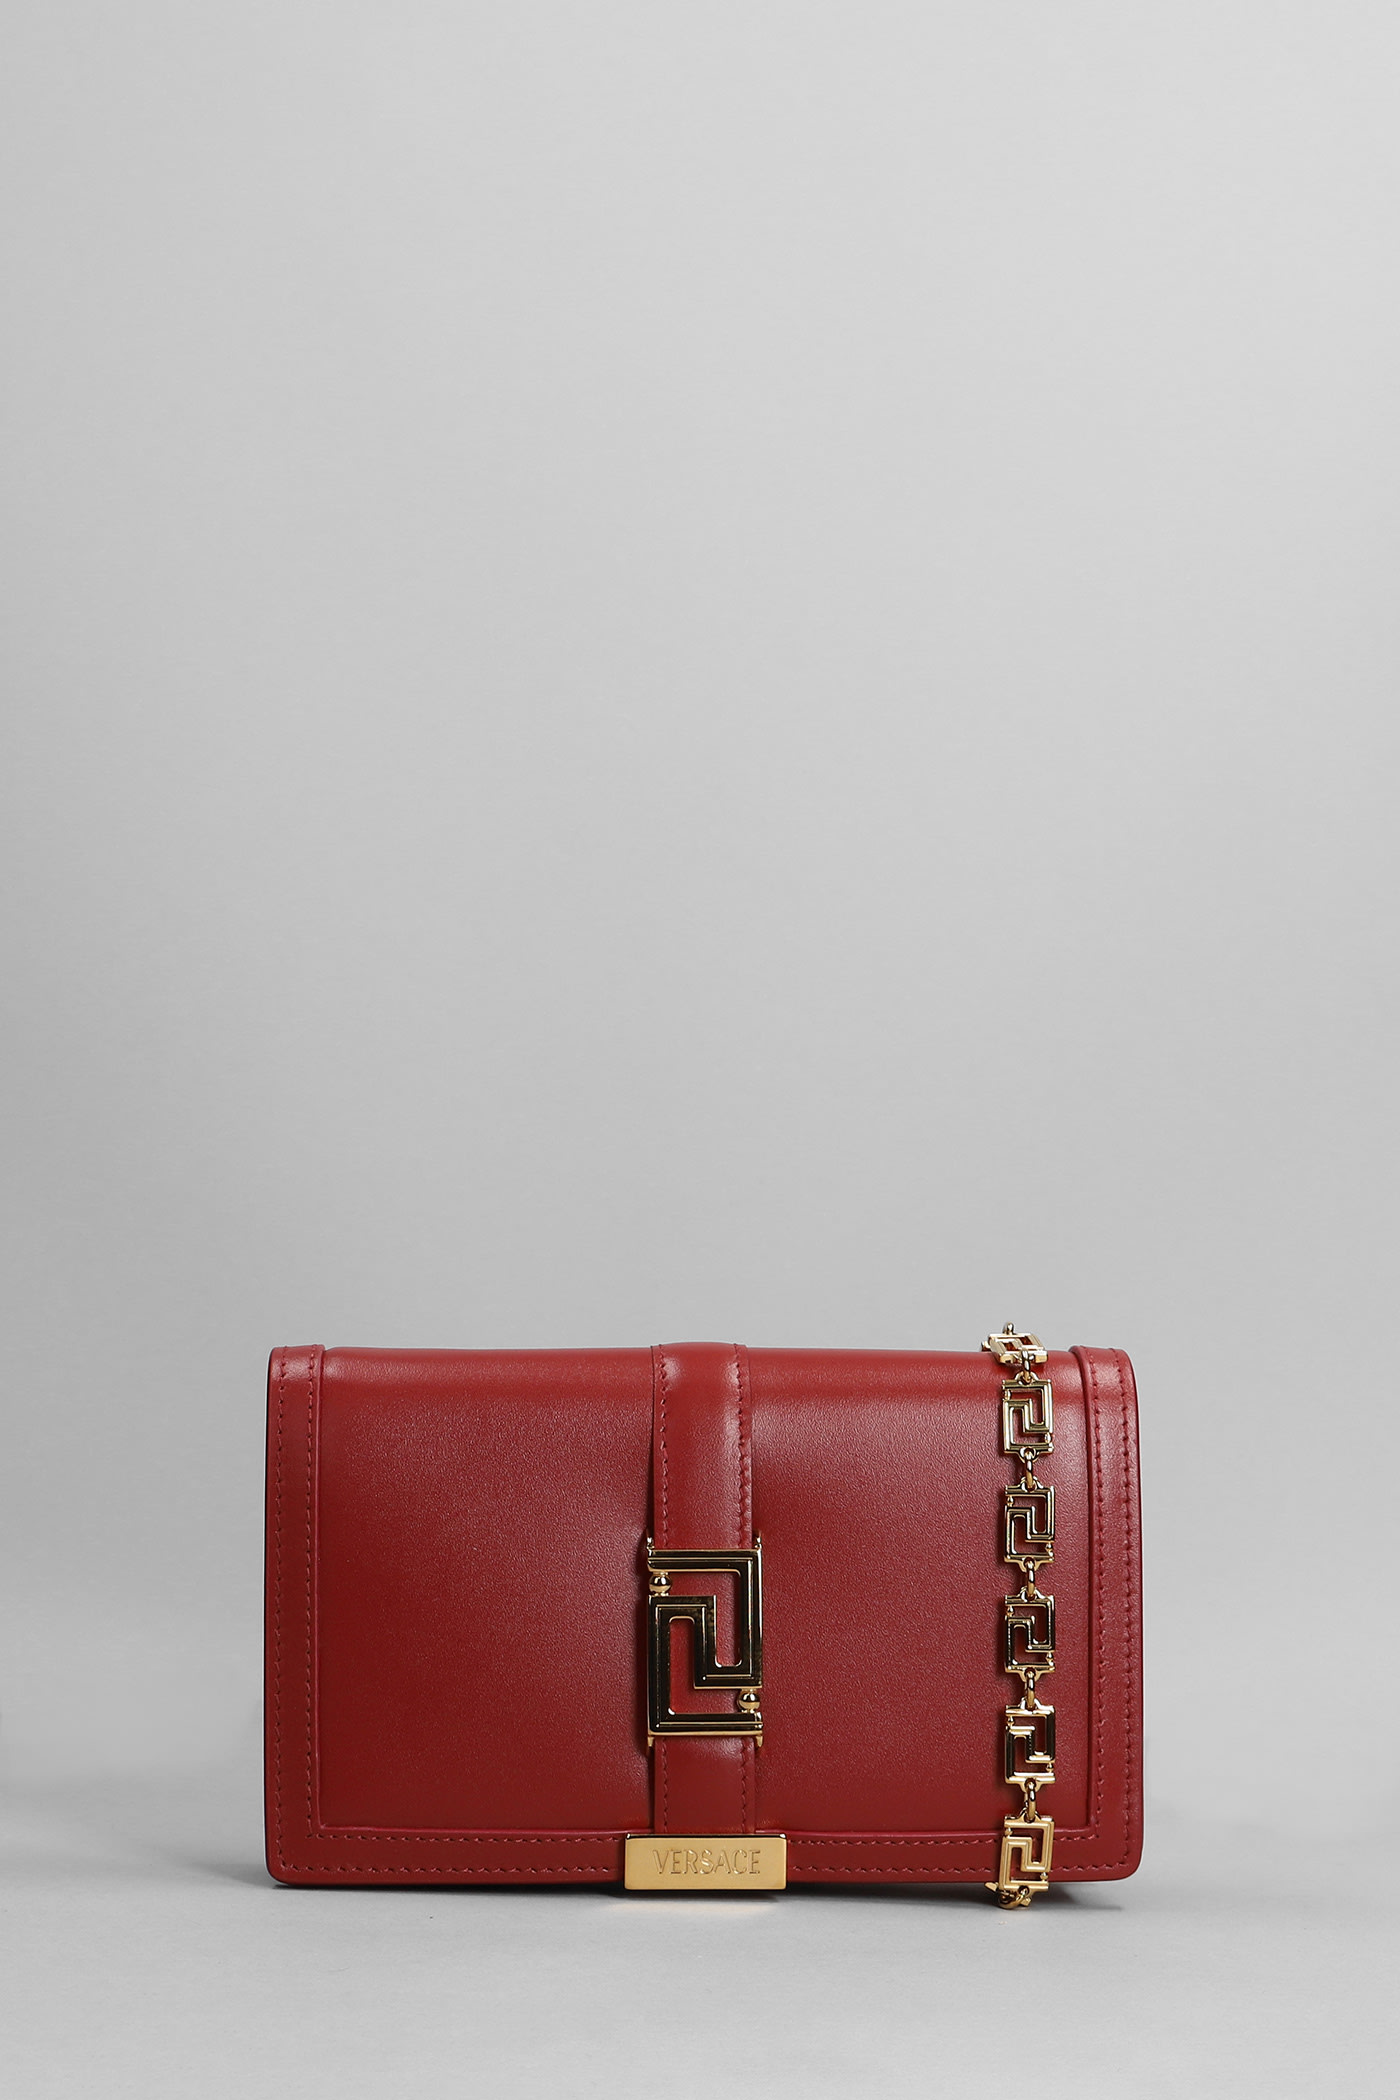 Versace Shoulder Bag In Bordeaux Leather